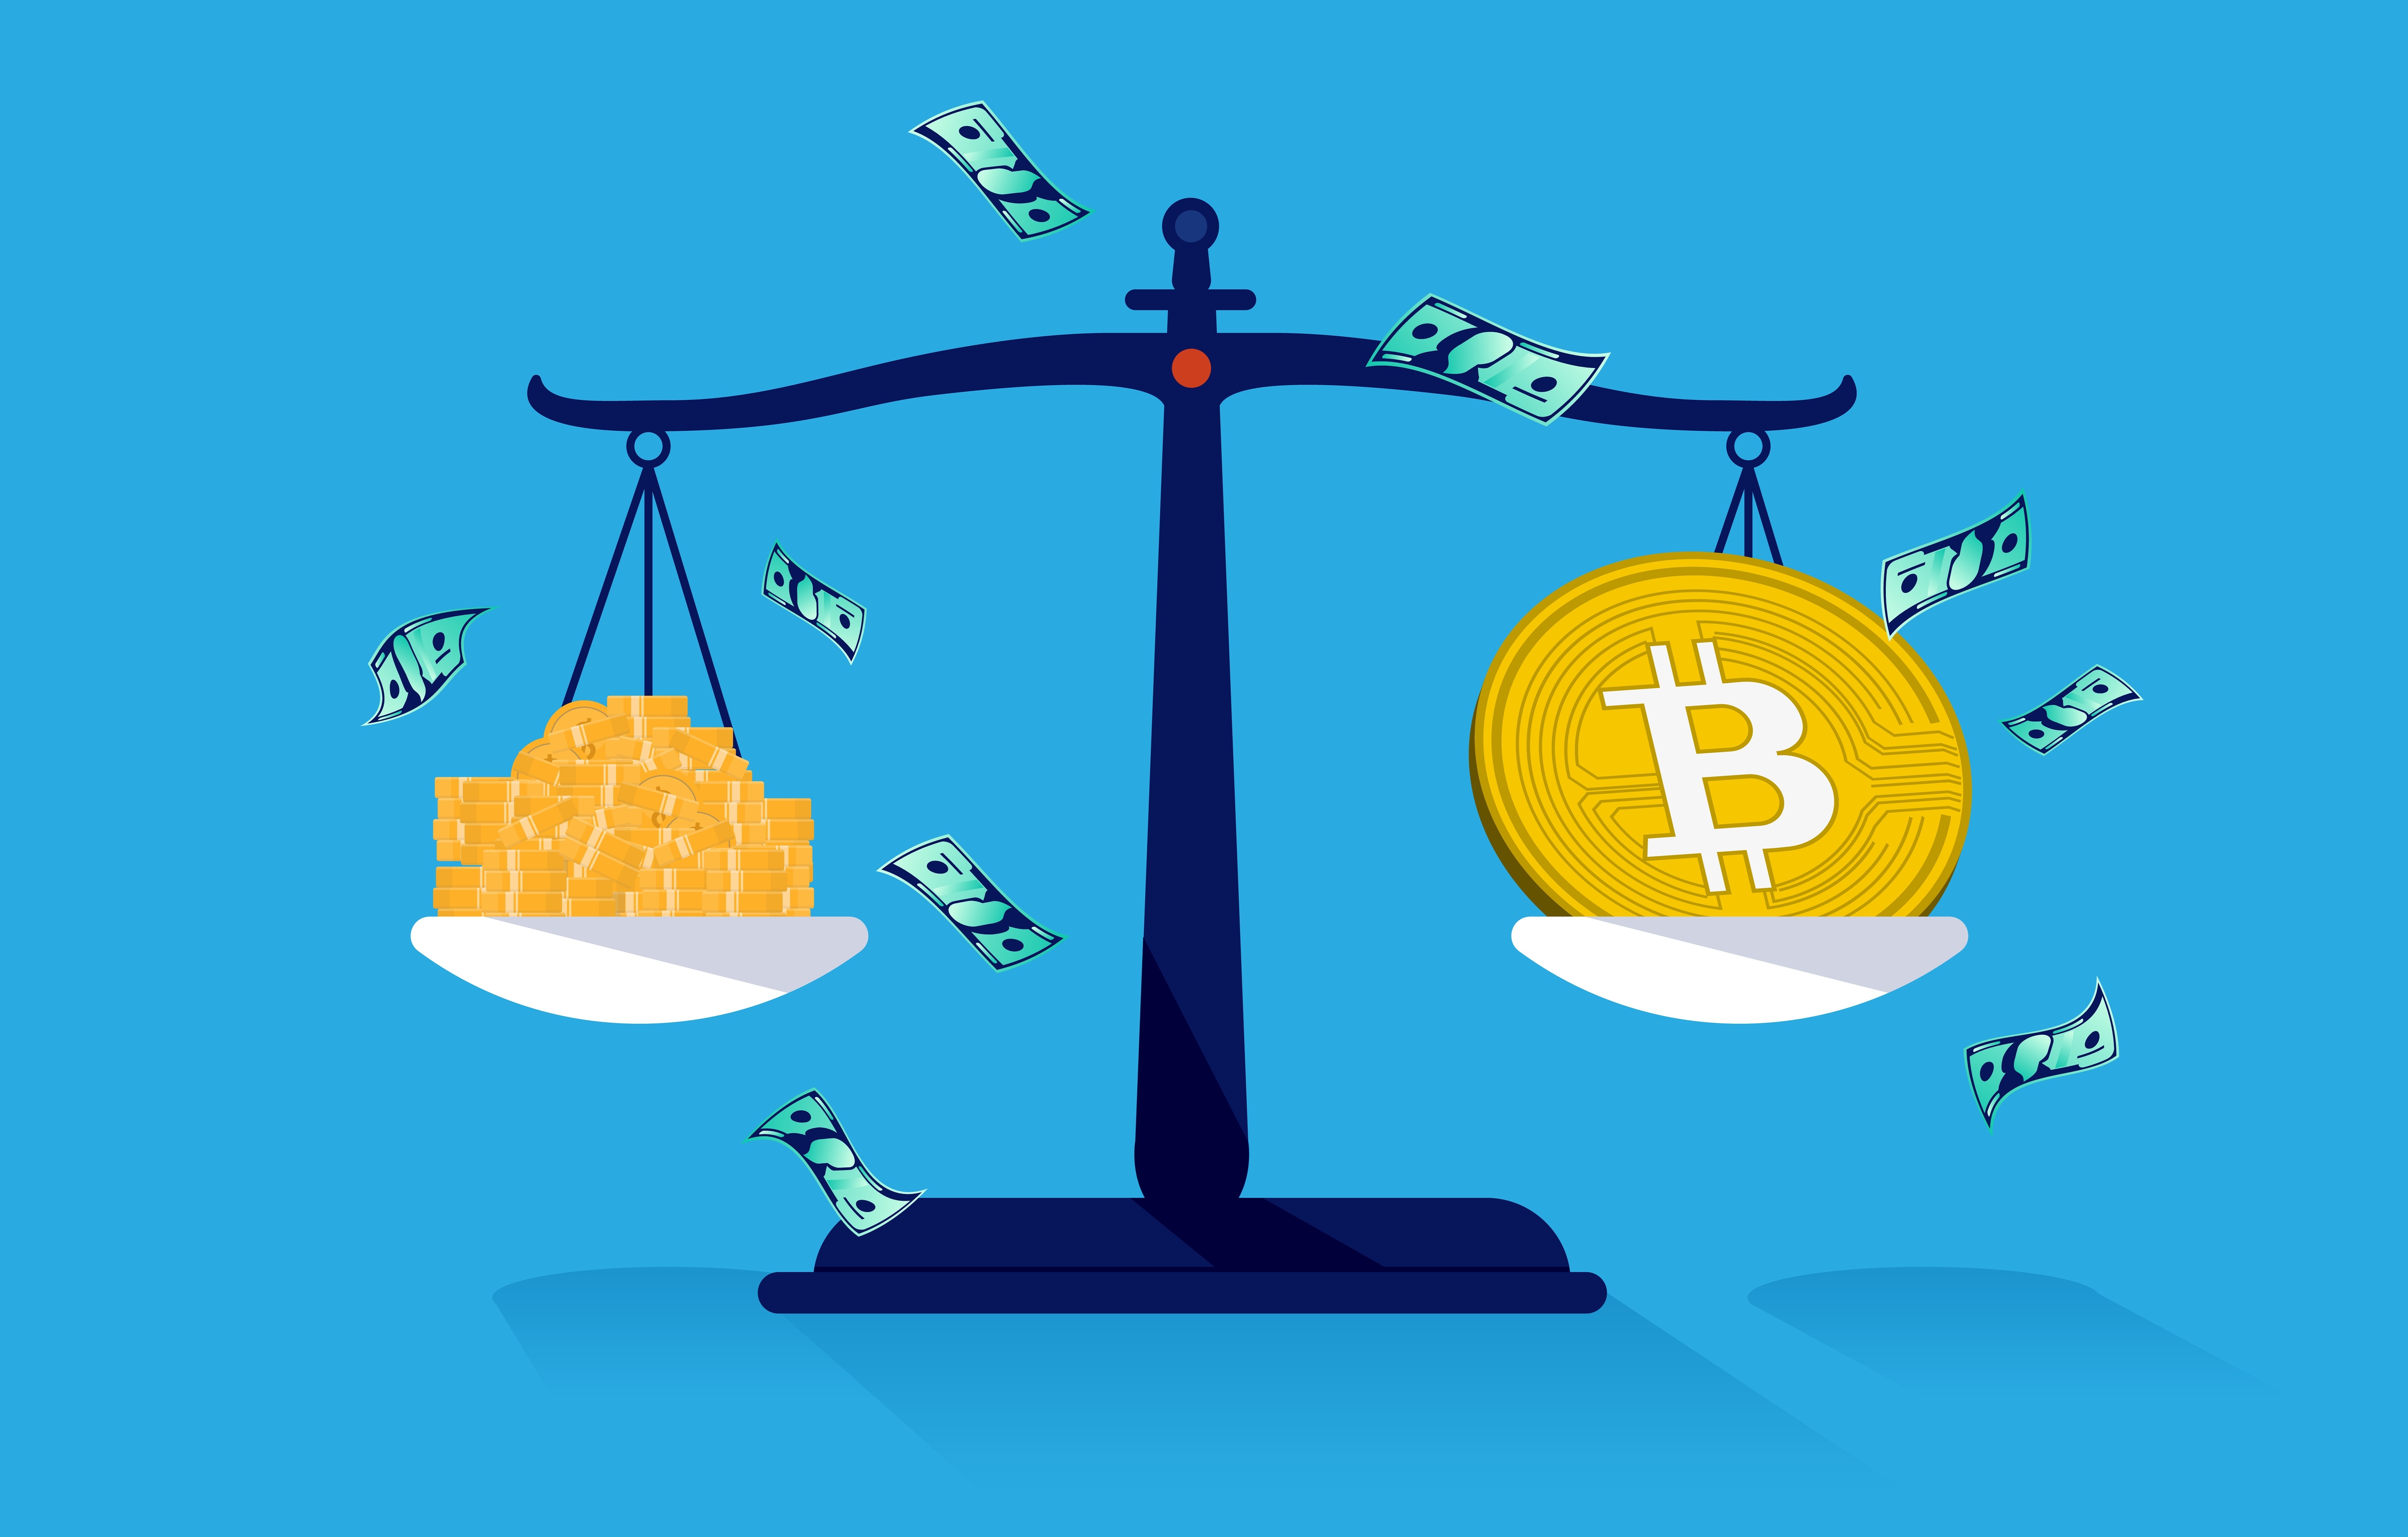 Comparison of Bitcoin and fiat money